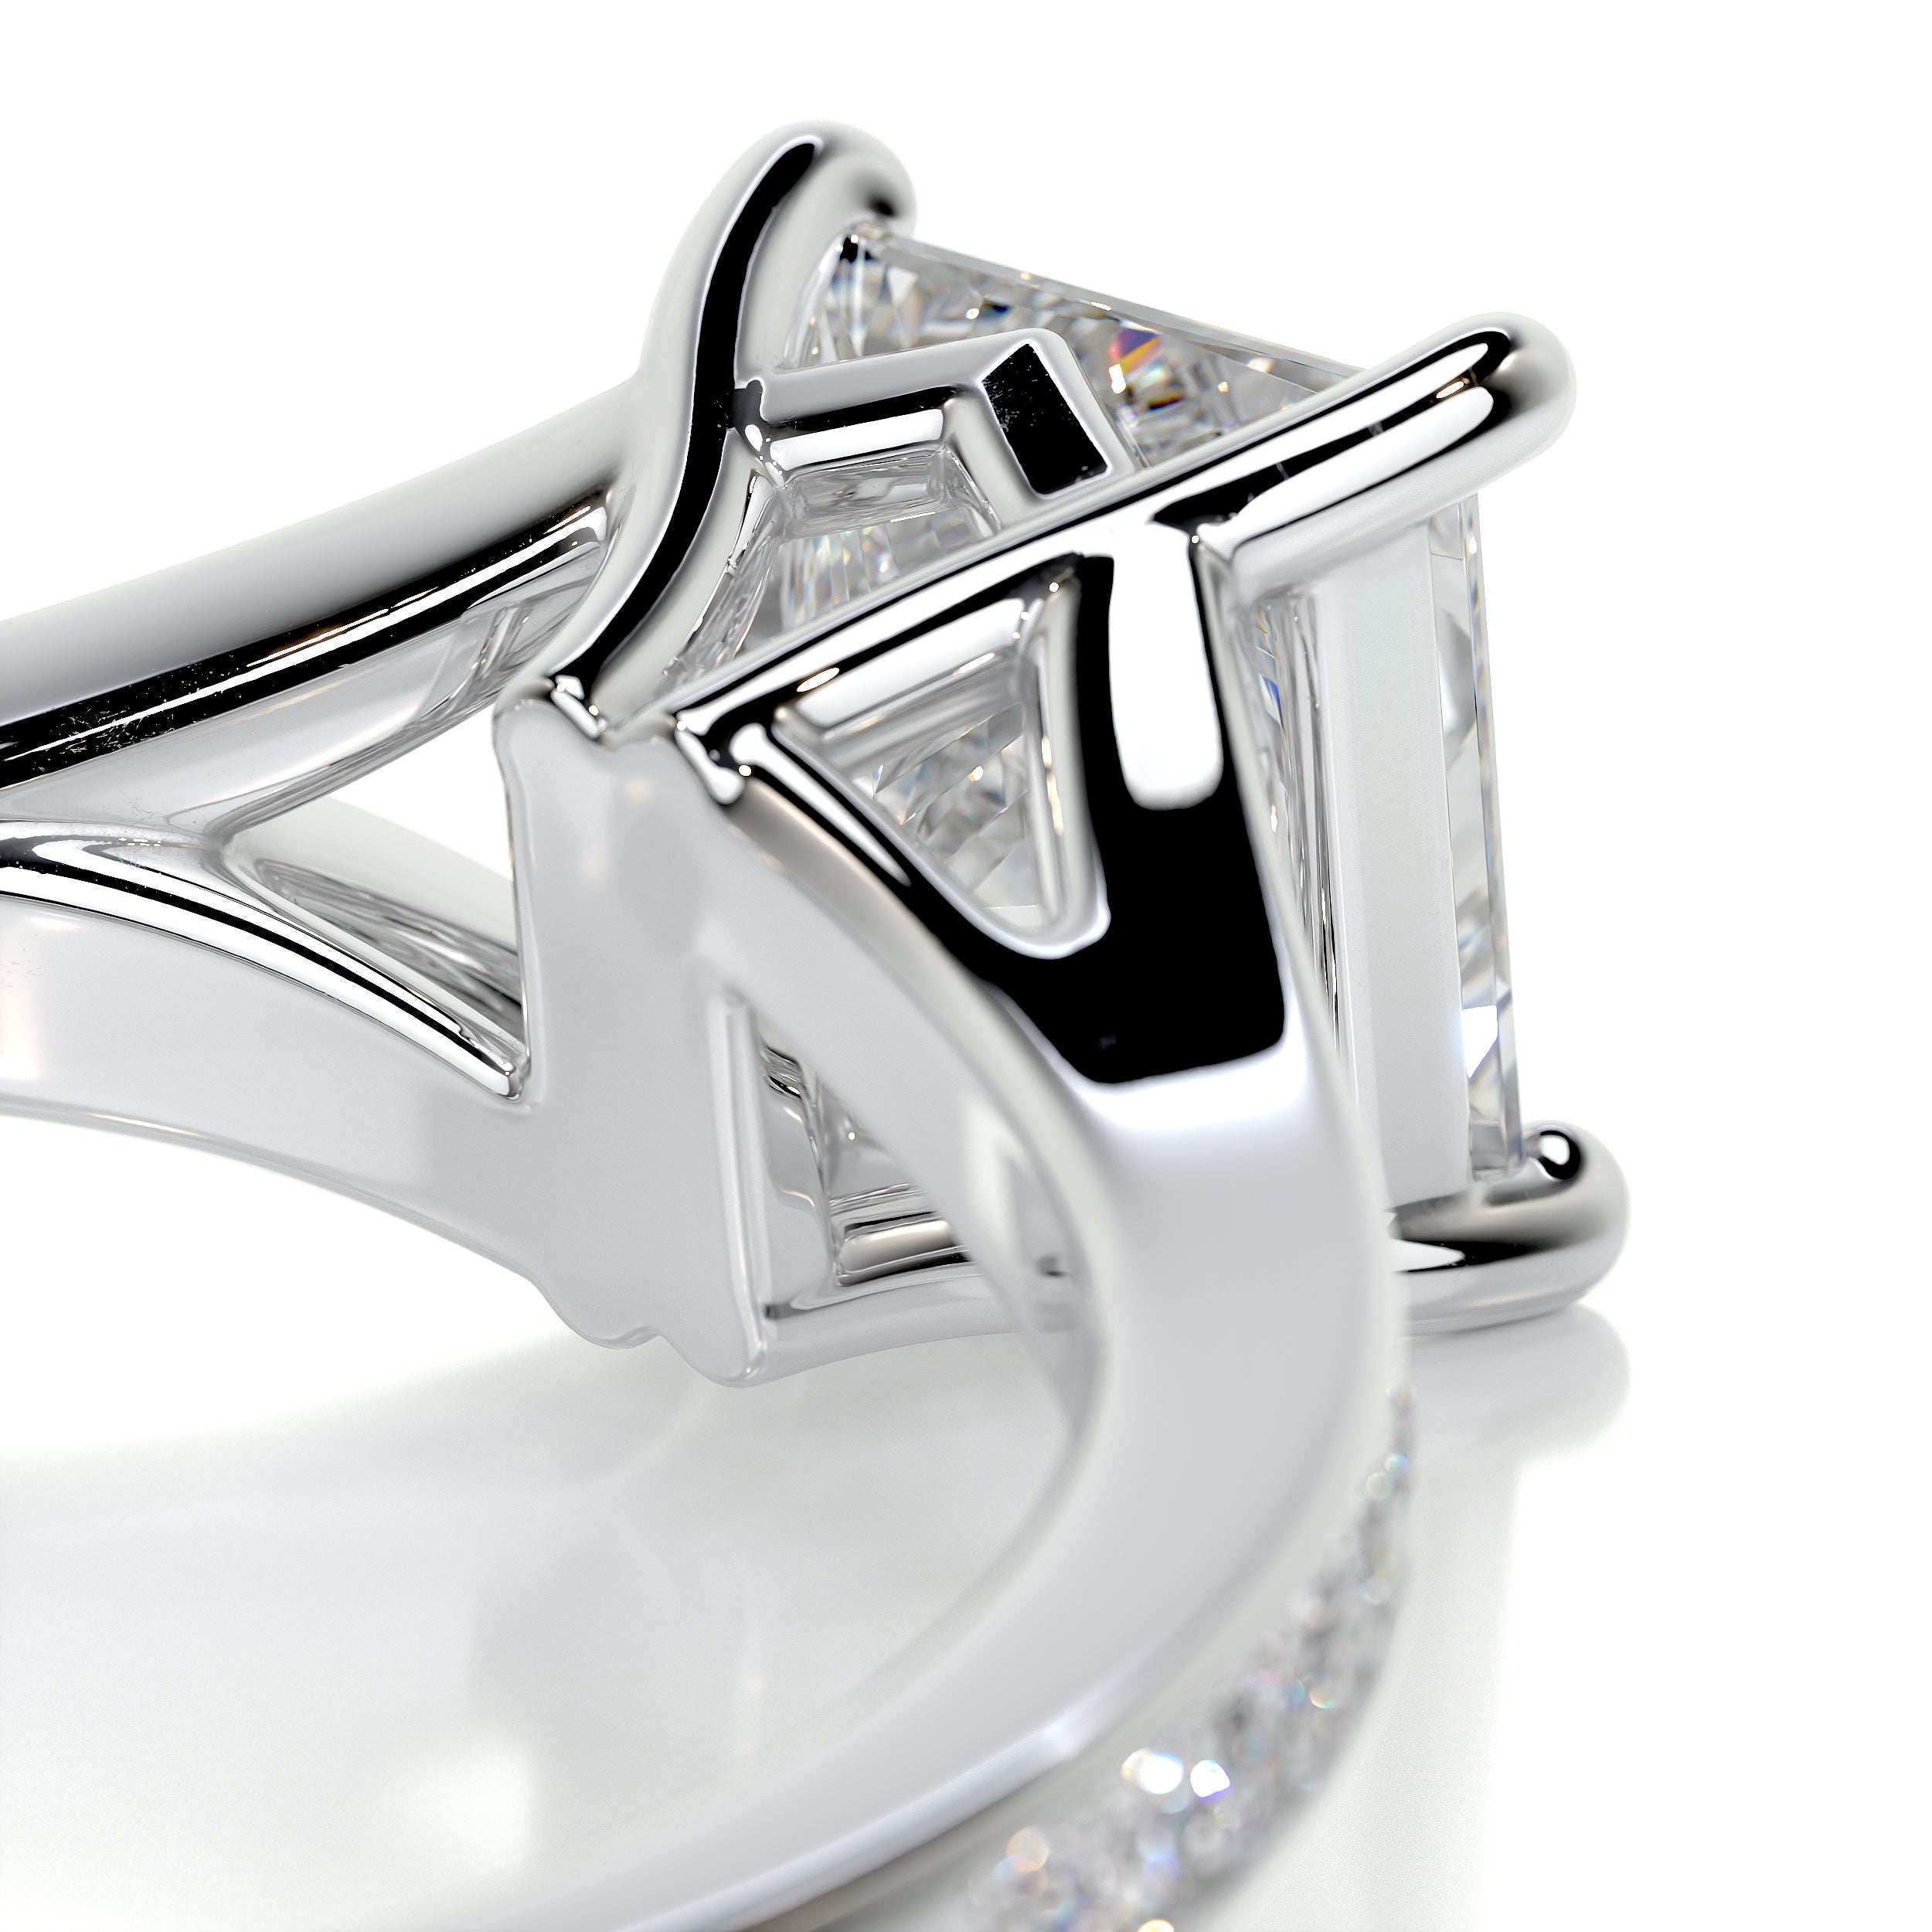 Alexandria Diamond Engagement Ring -18K White Gold